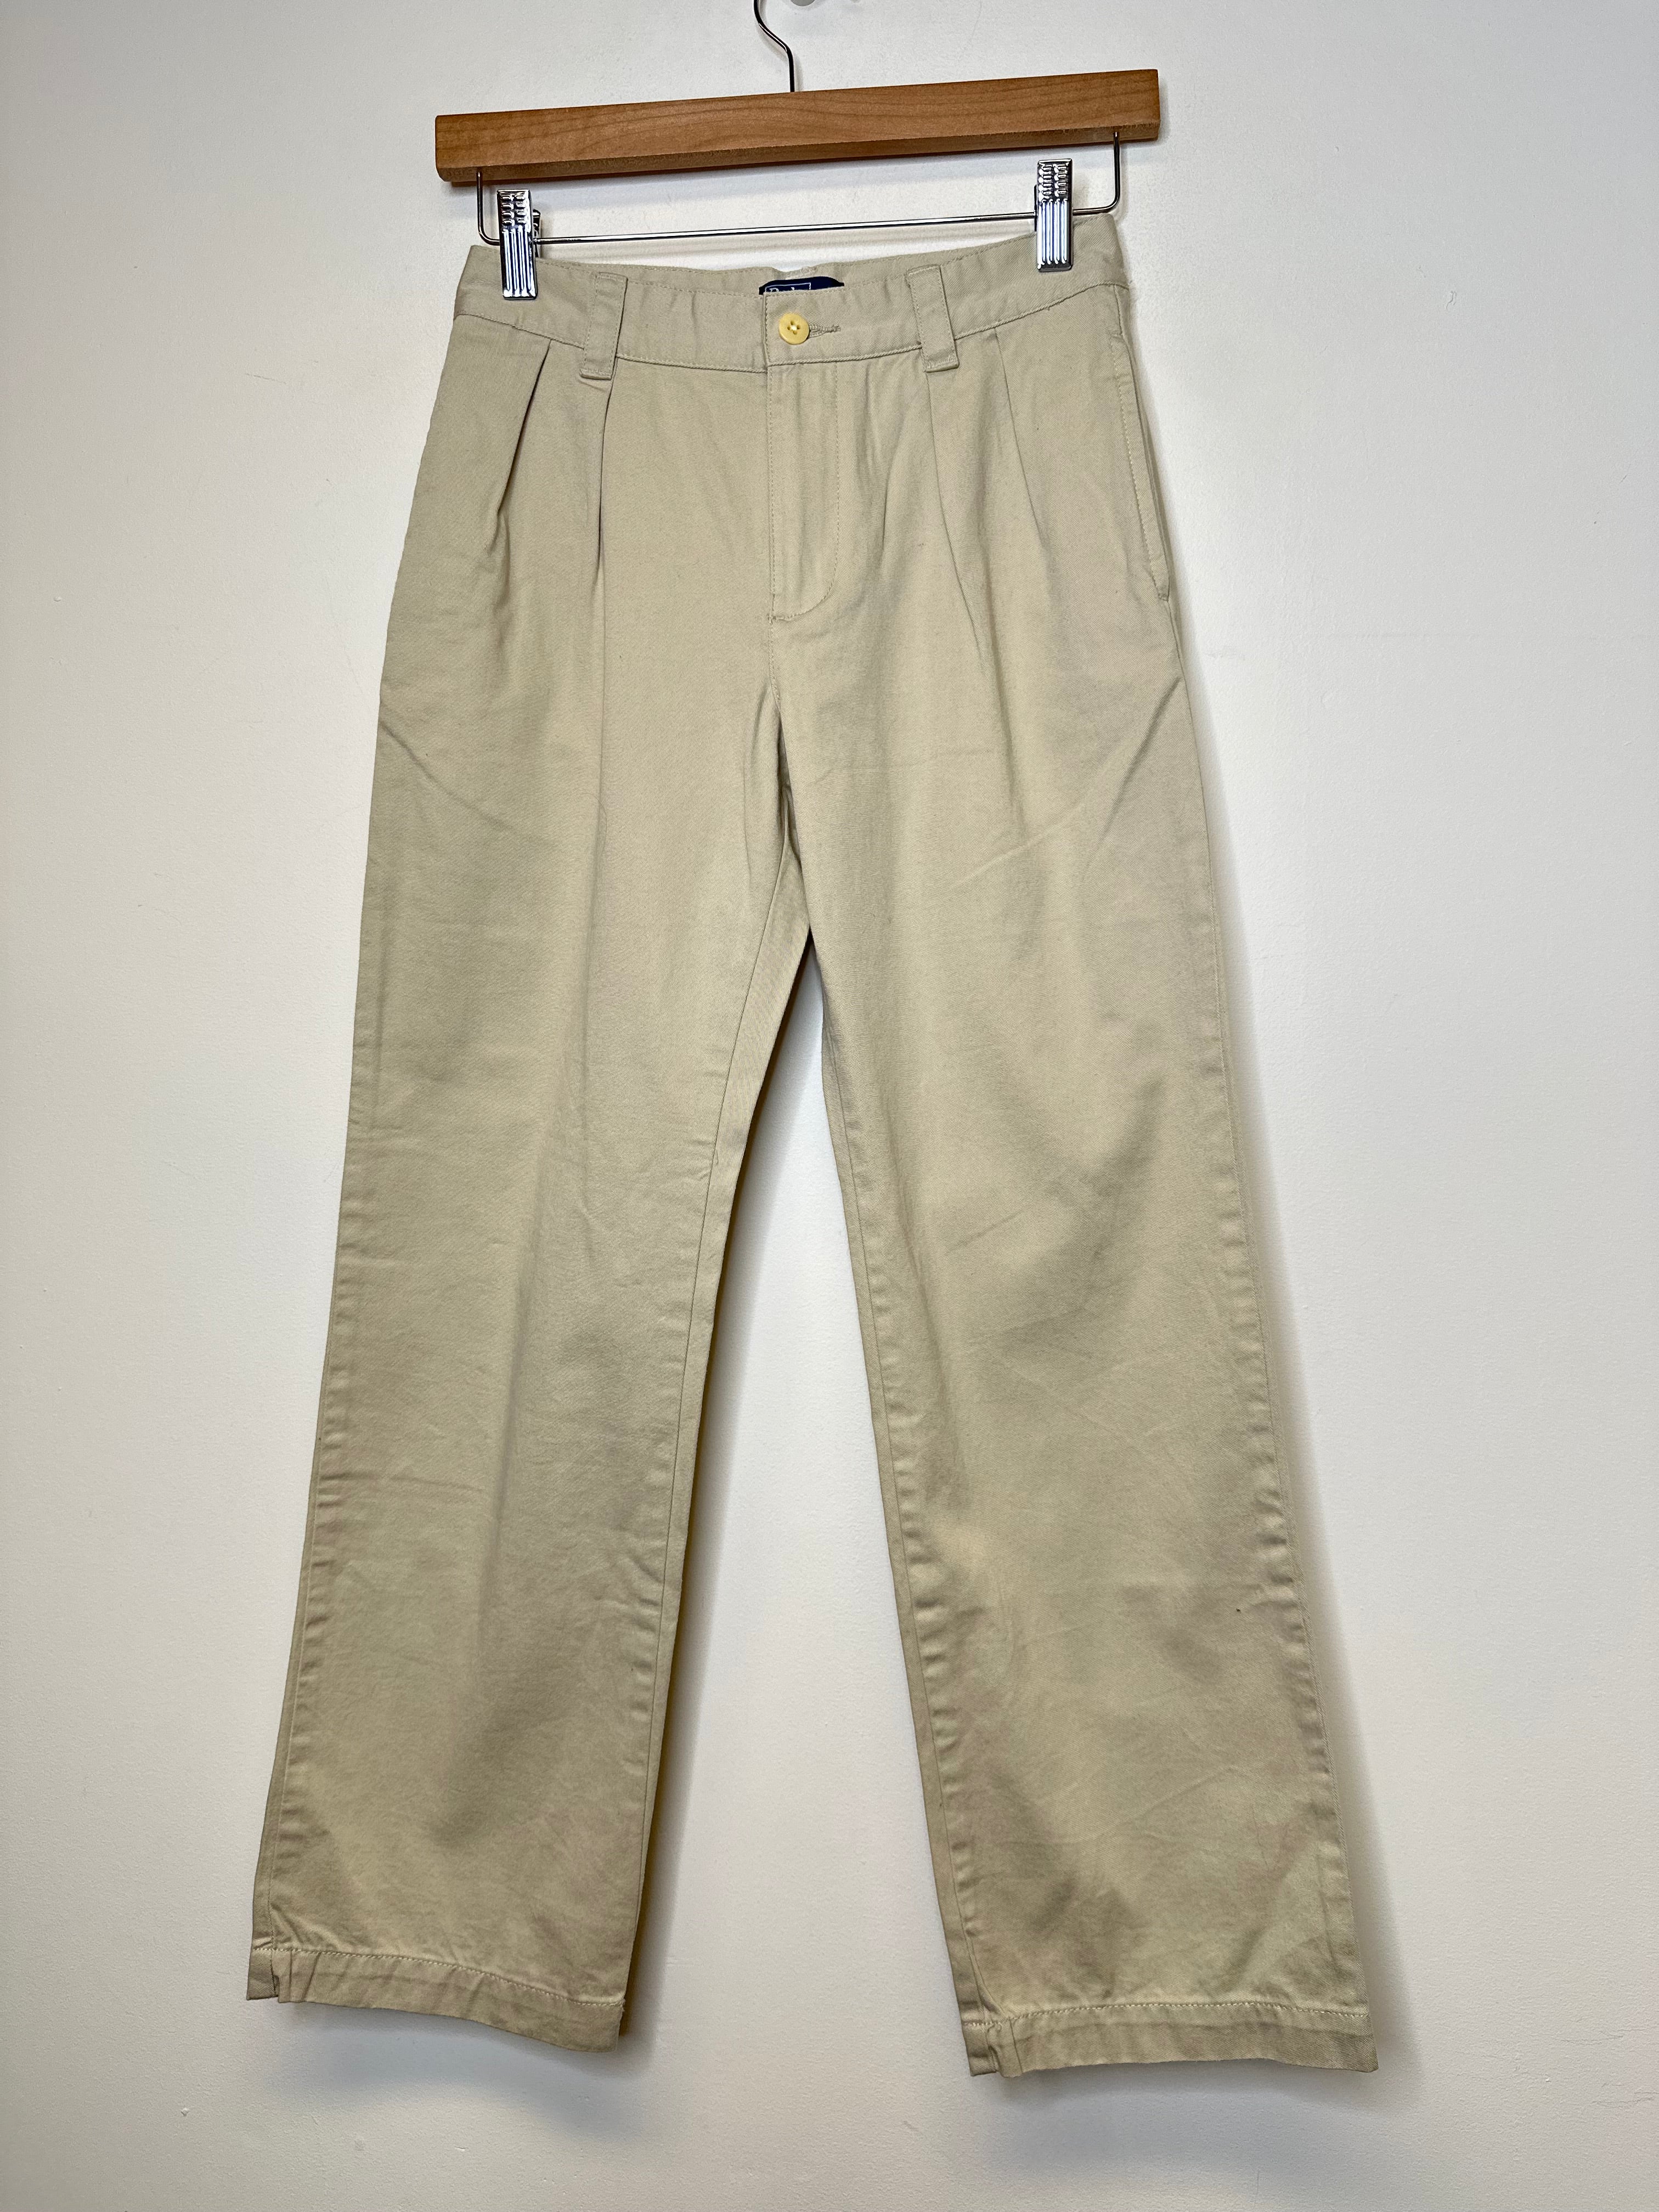 Vintage Beige Chino Pants - S/26